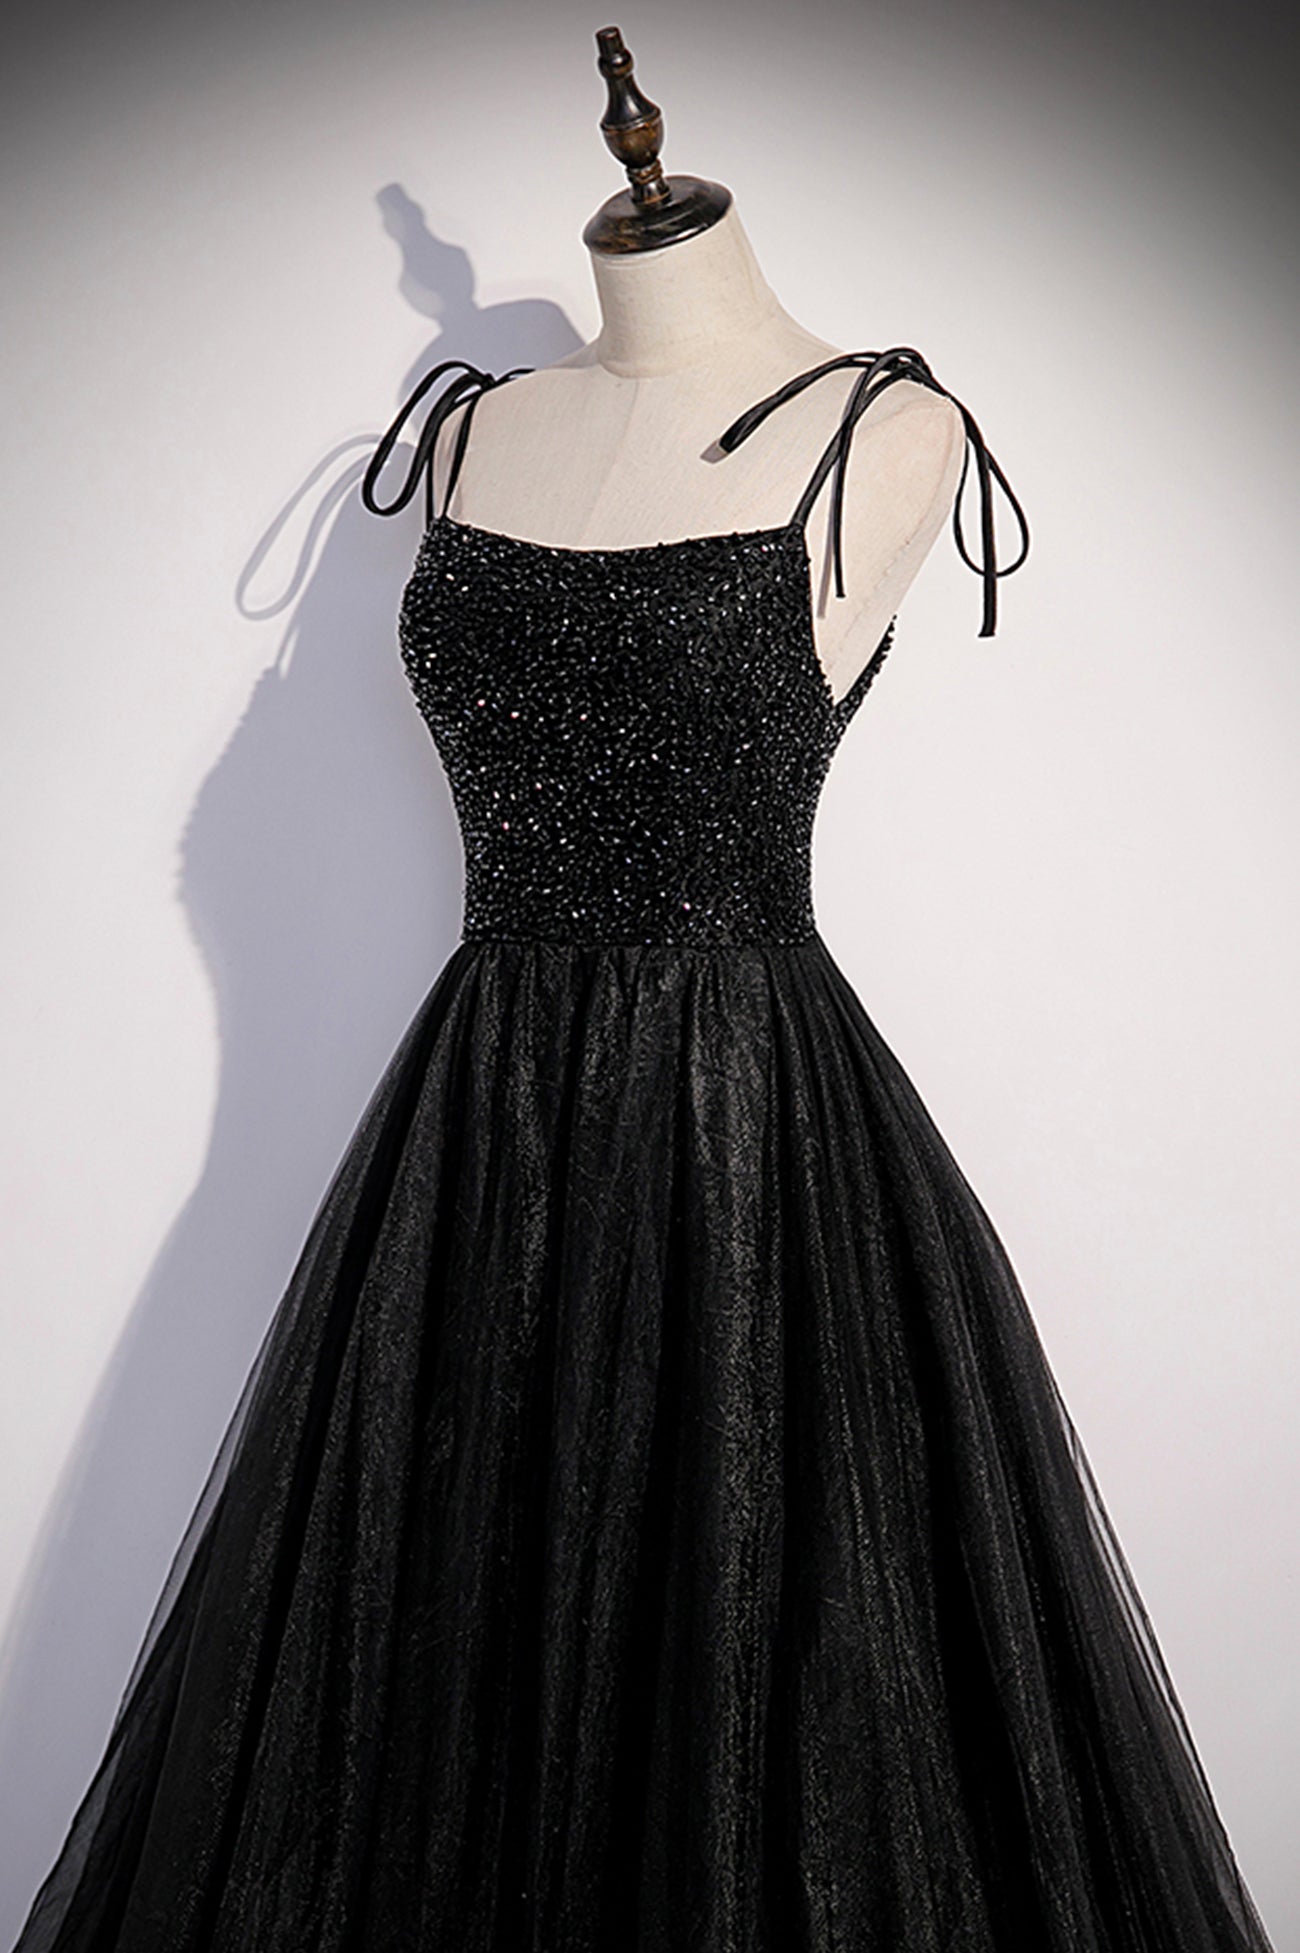 Black Tulle Beaded Long Prom Dress, A-Line Spaghetti Straps Evening Dress